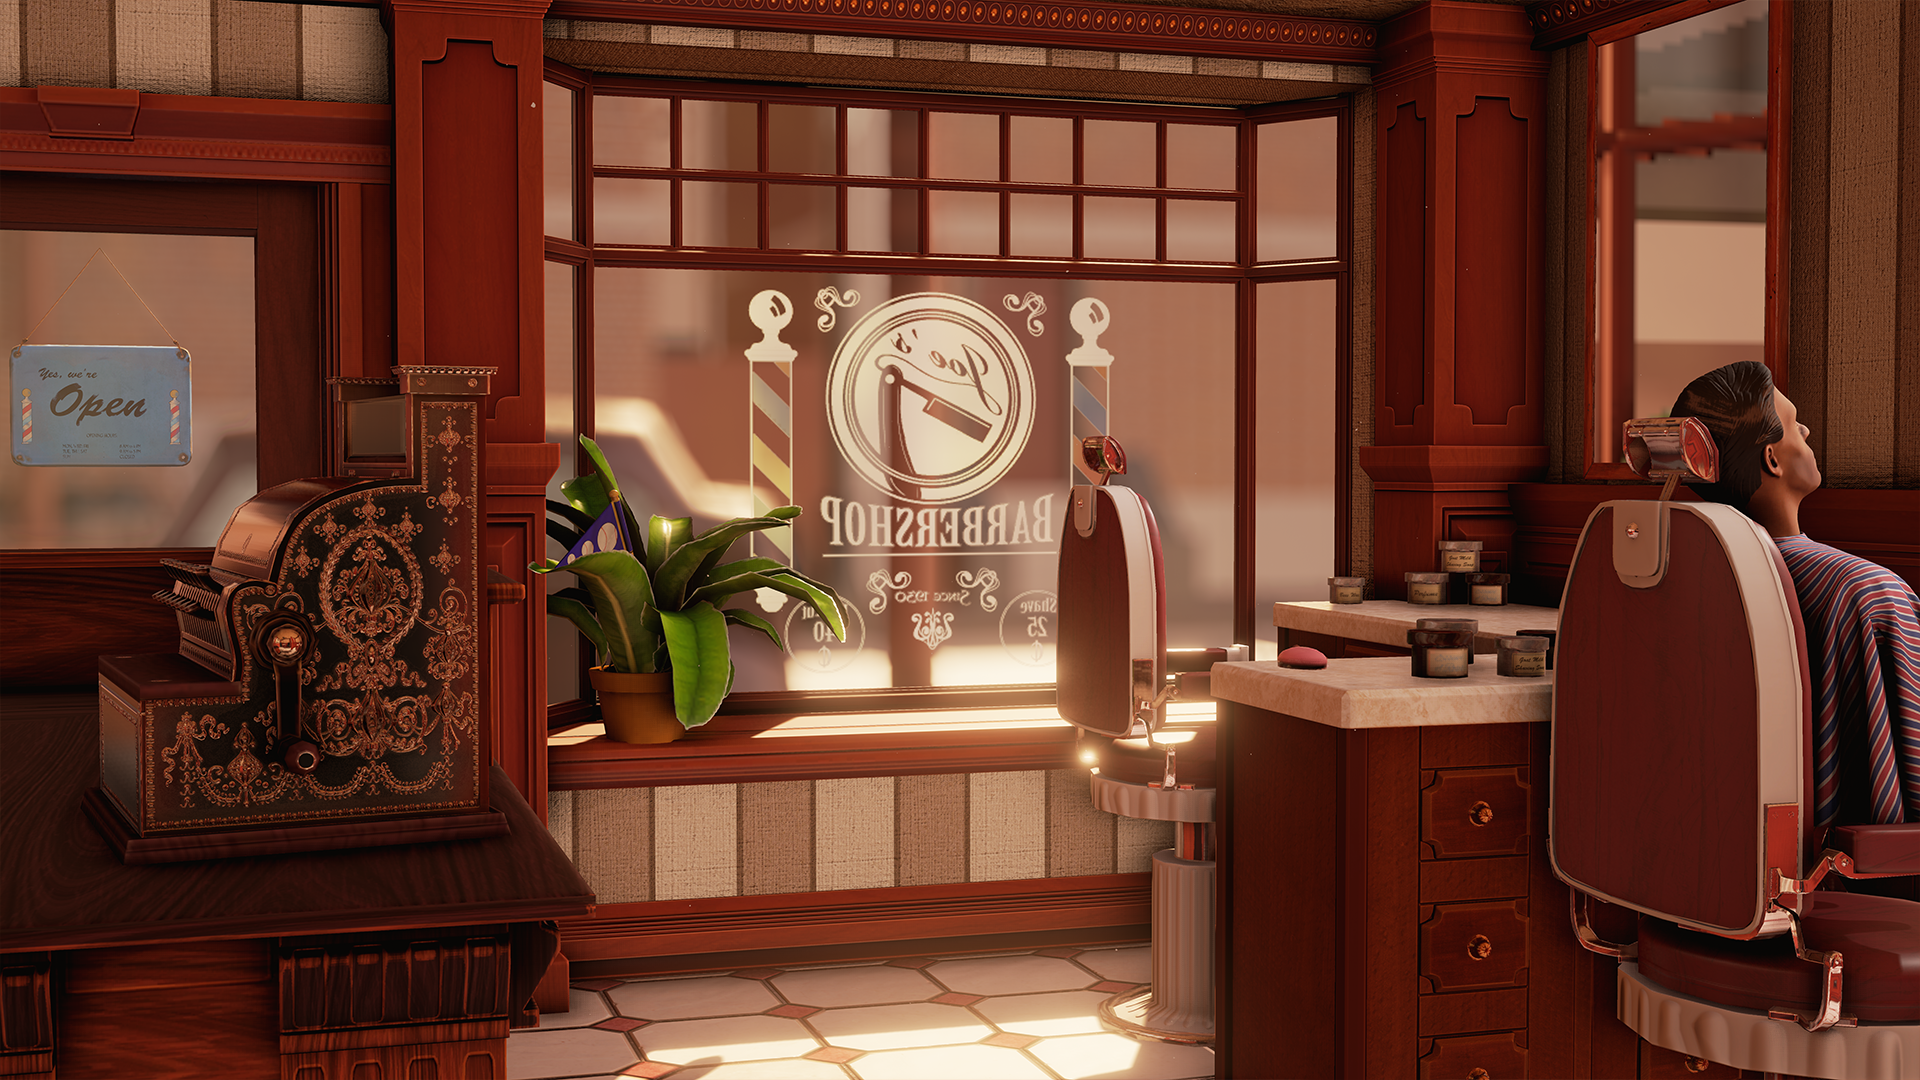 Barber Shop Simulator - A 3D Fantasy Game - Unity Forum